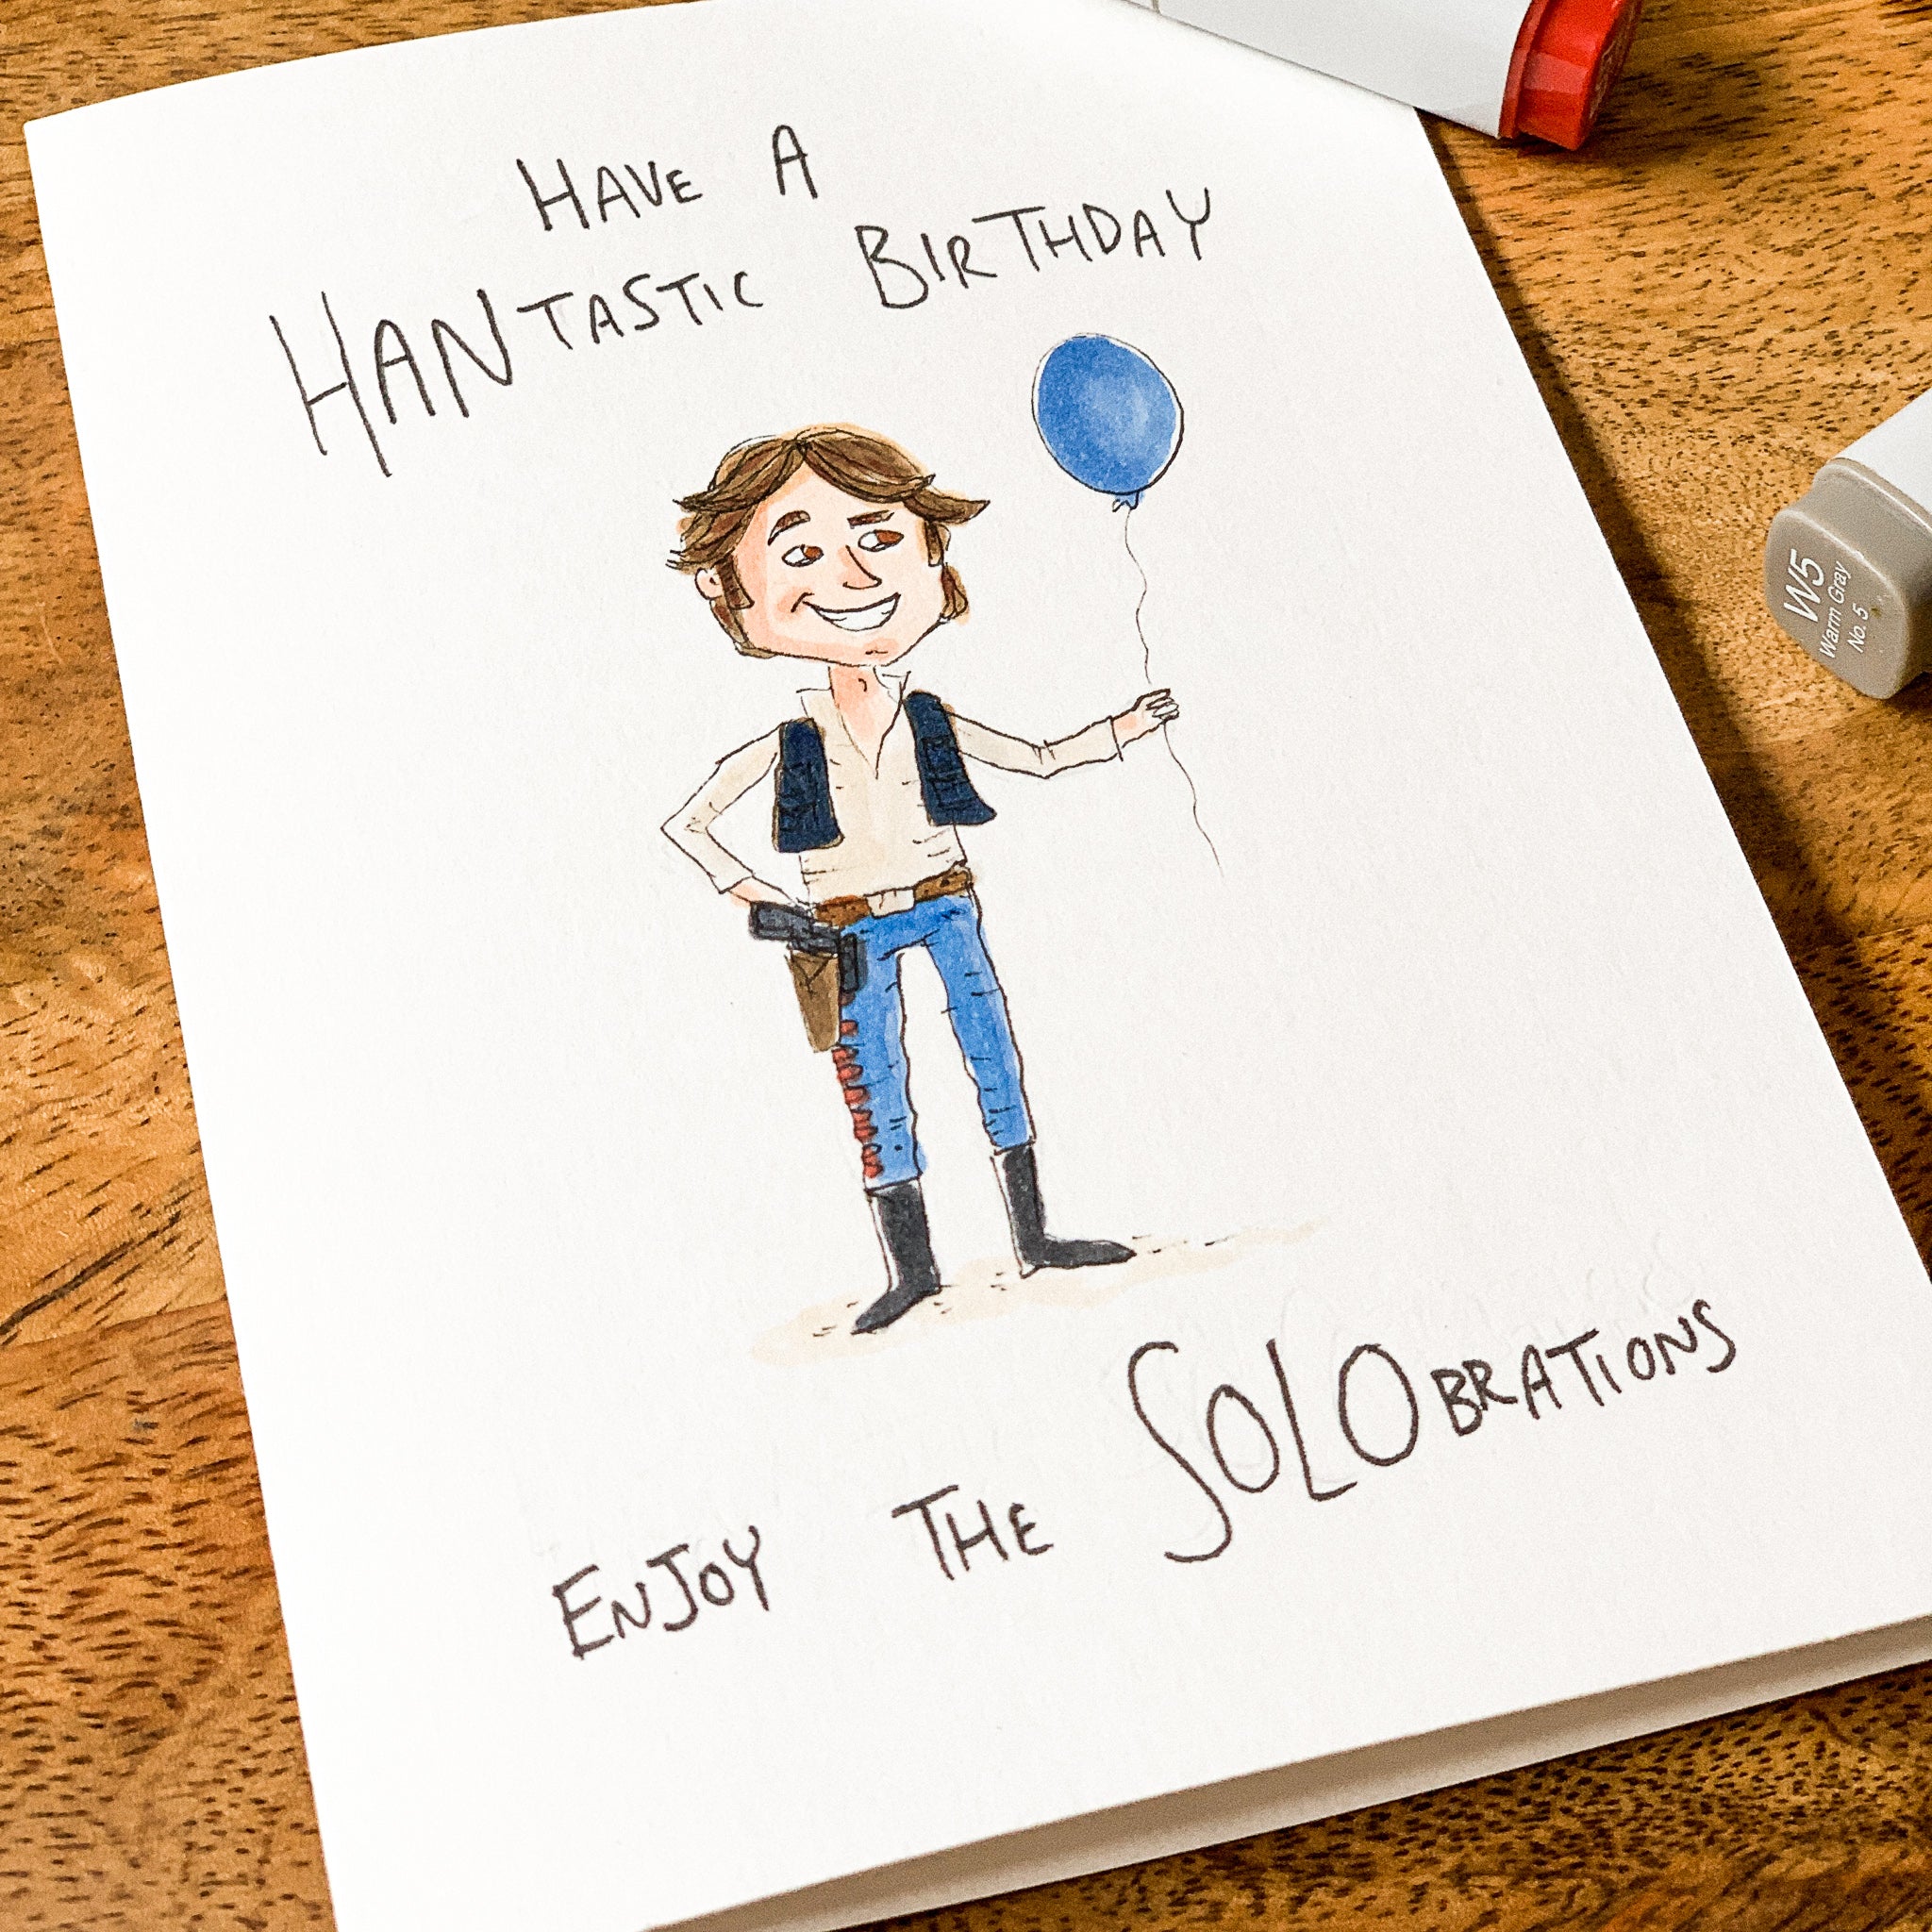 Have a Hantastic Birthday, Enjoy The Solobrations - Well Drawn